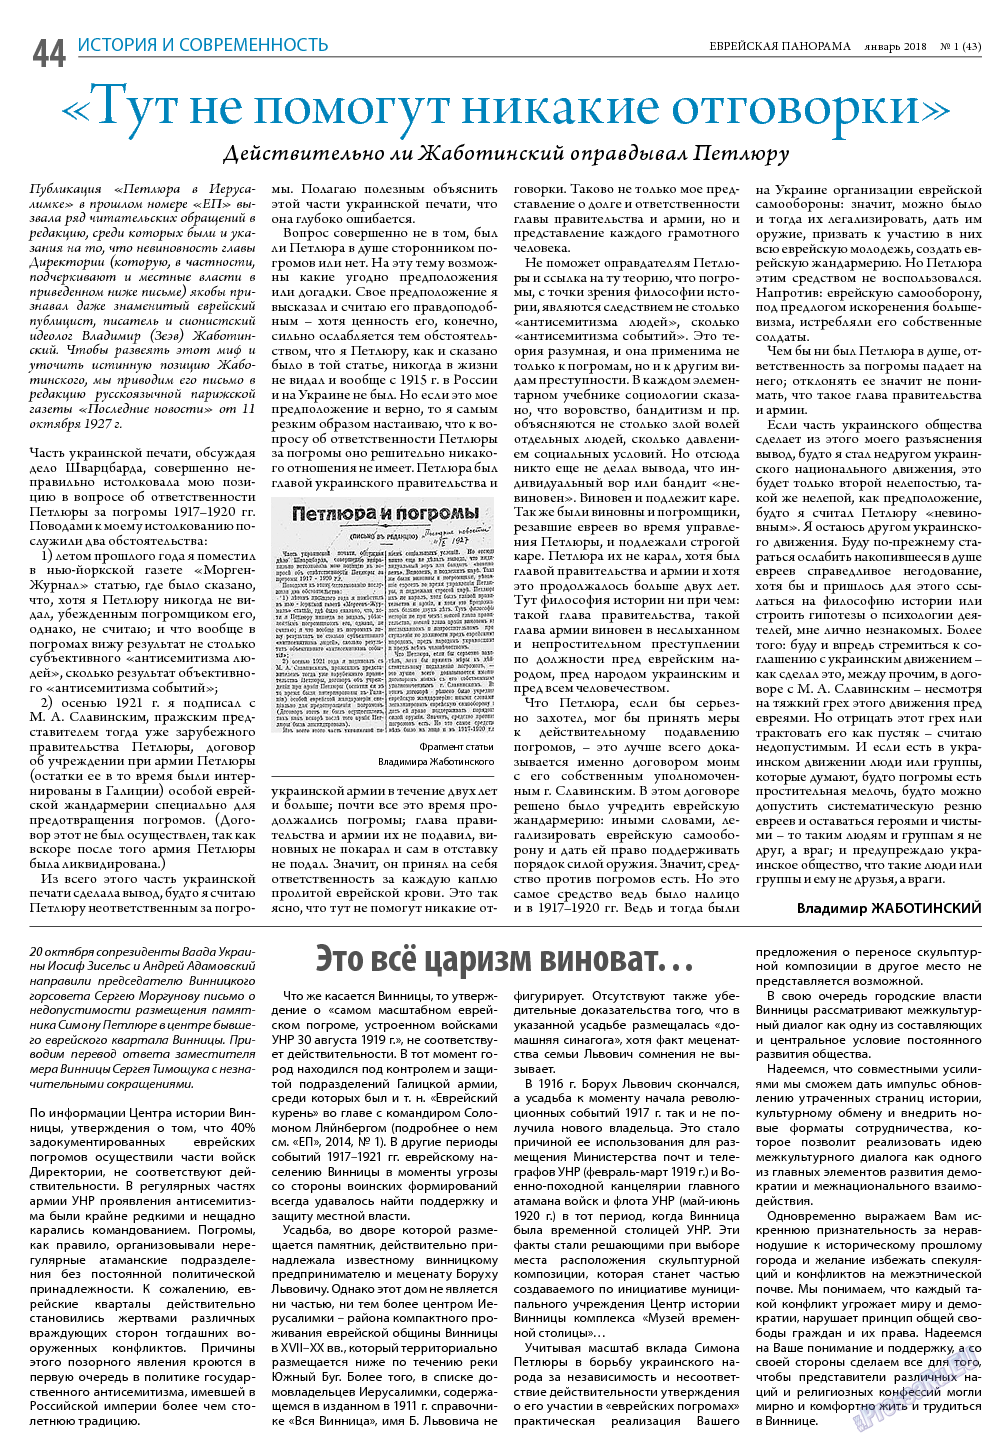 Еврейская панорама, газета. 2018 №1 стр.44